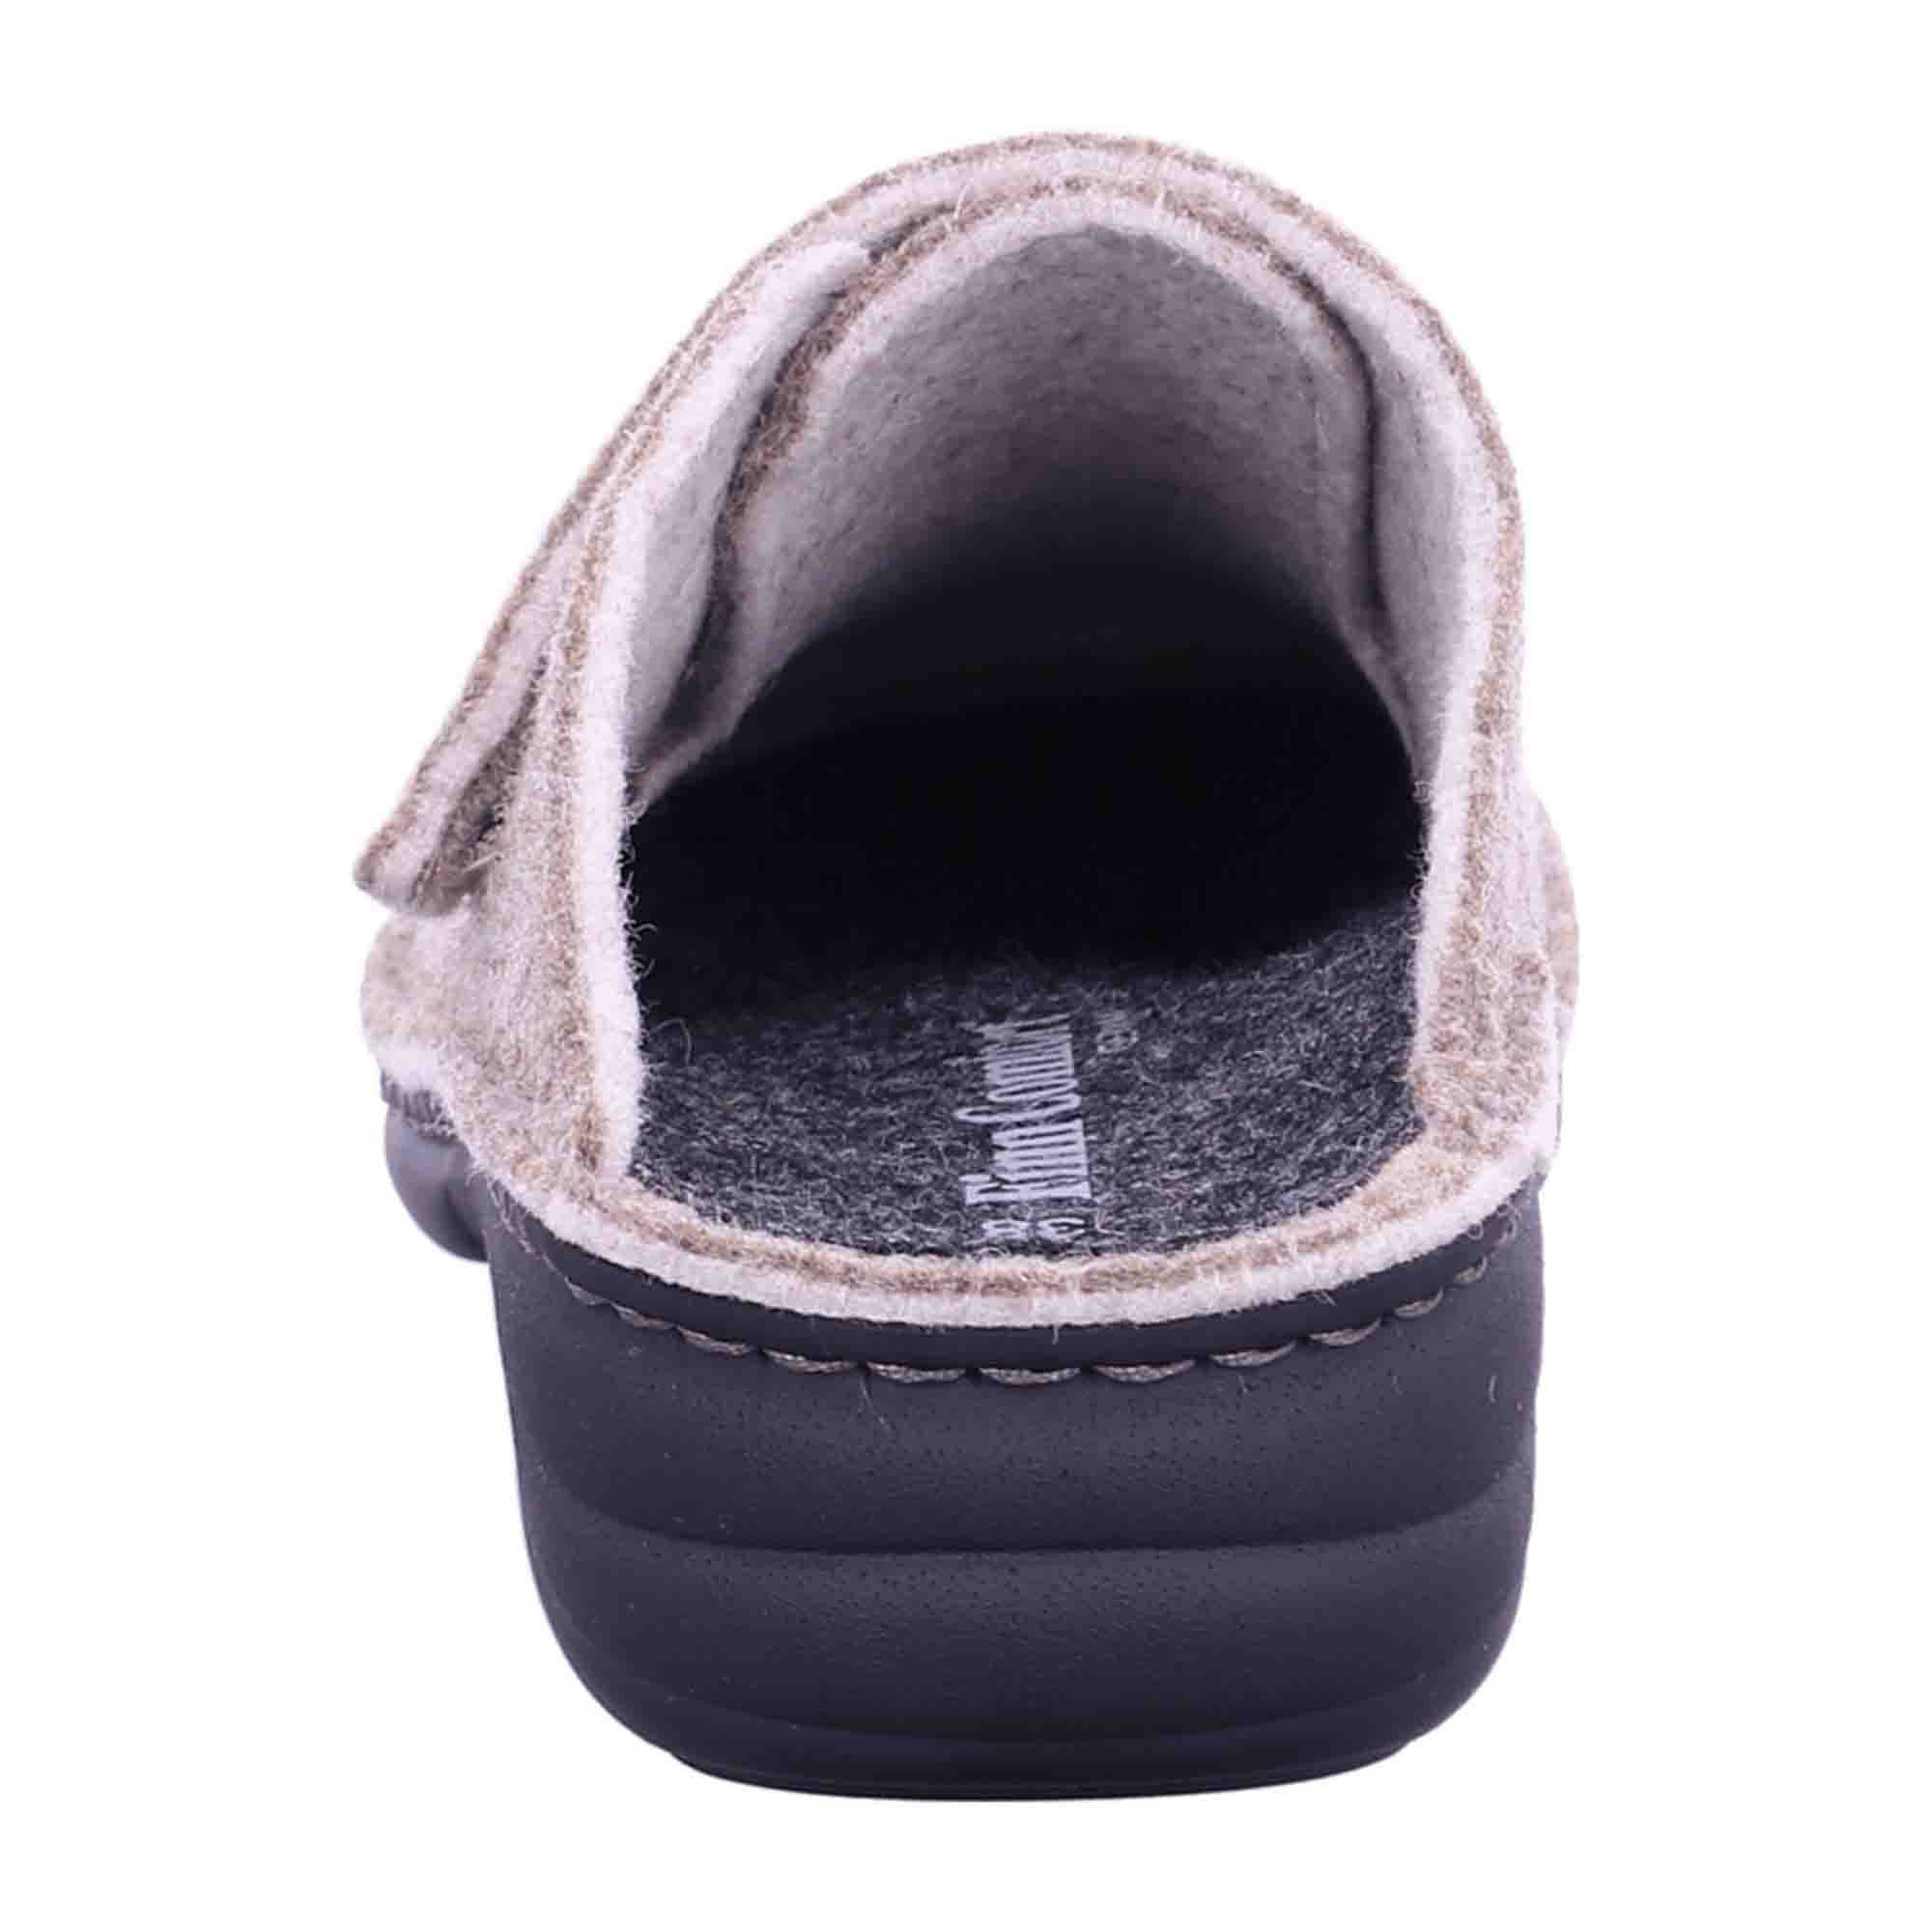 Finn Comfort Goms Women's Beige Comfort Shoes - Durable & Stylish